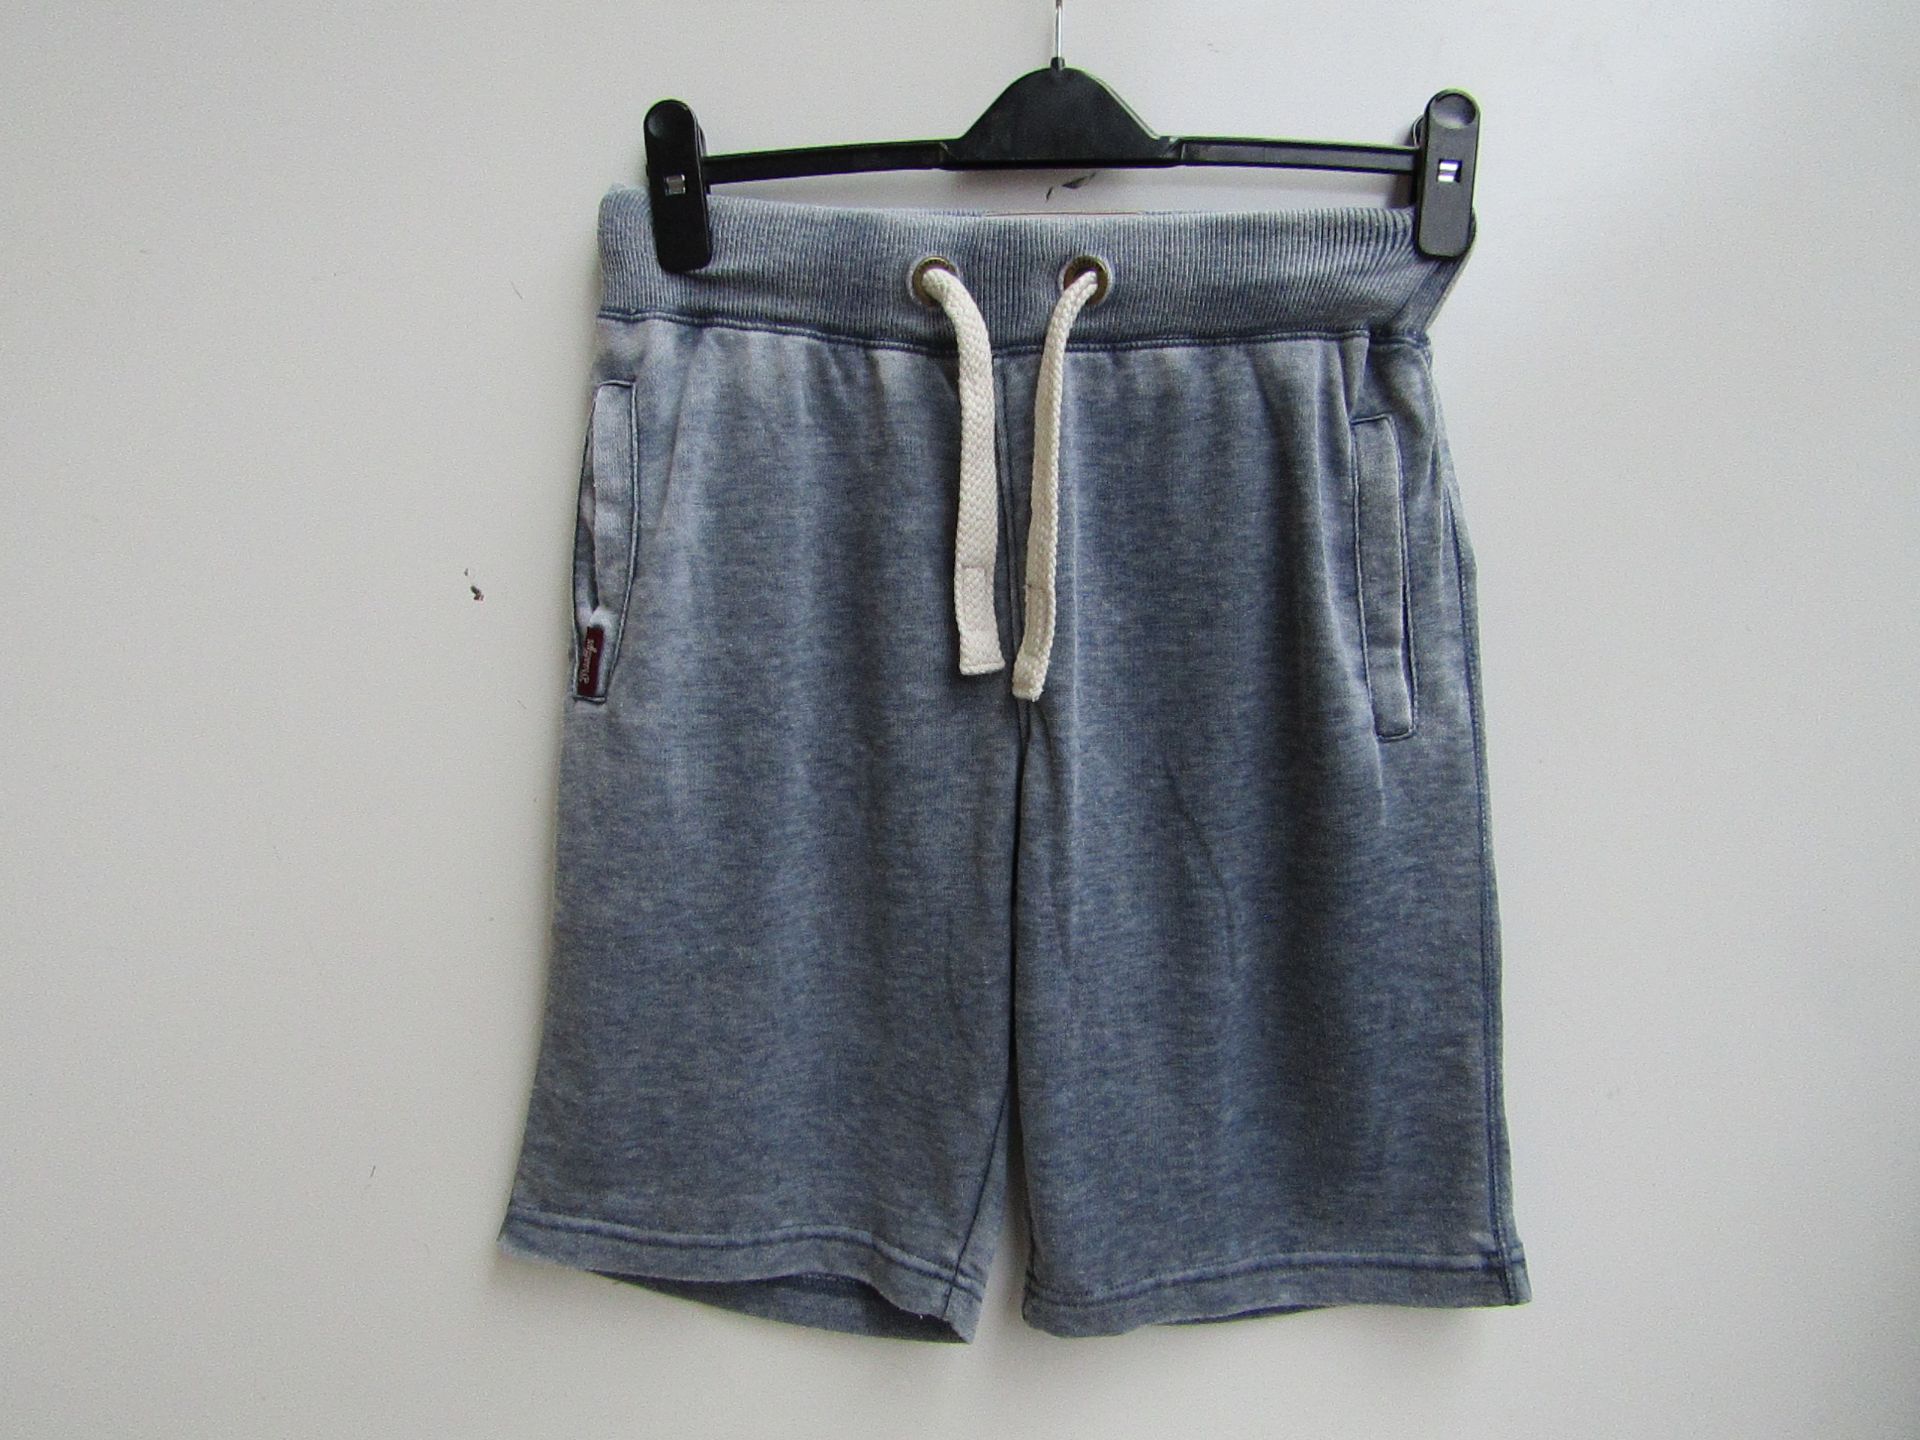 Brooklyn & Fox blue coloured shorts, size L.